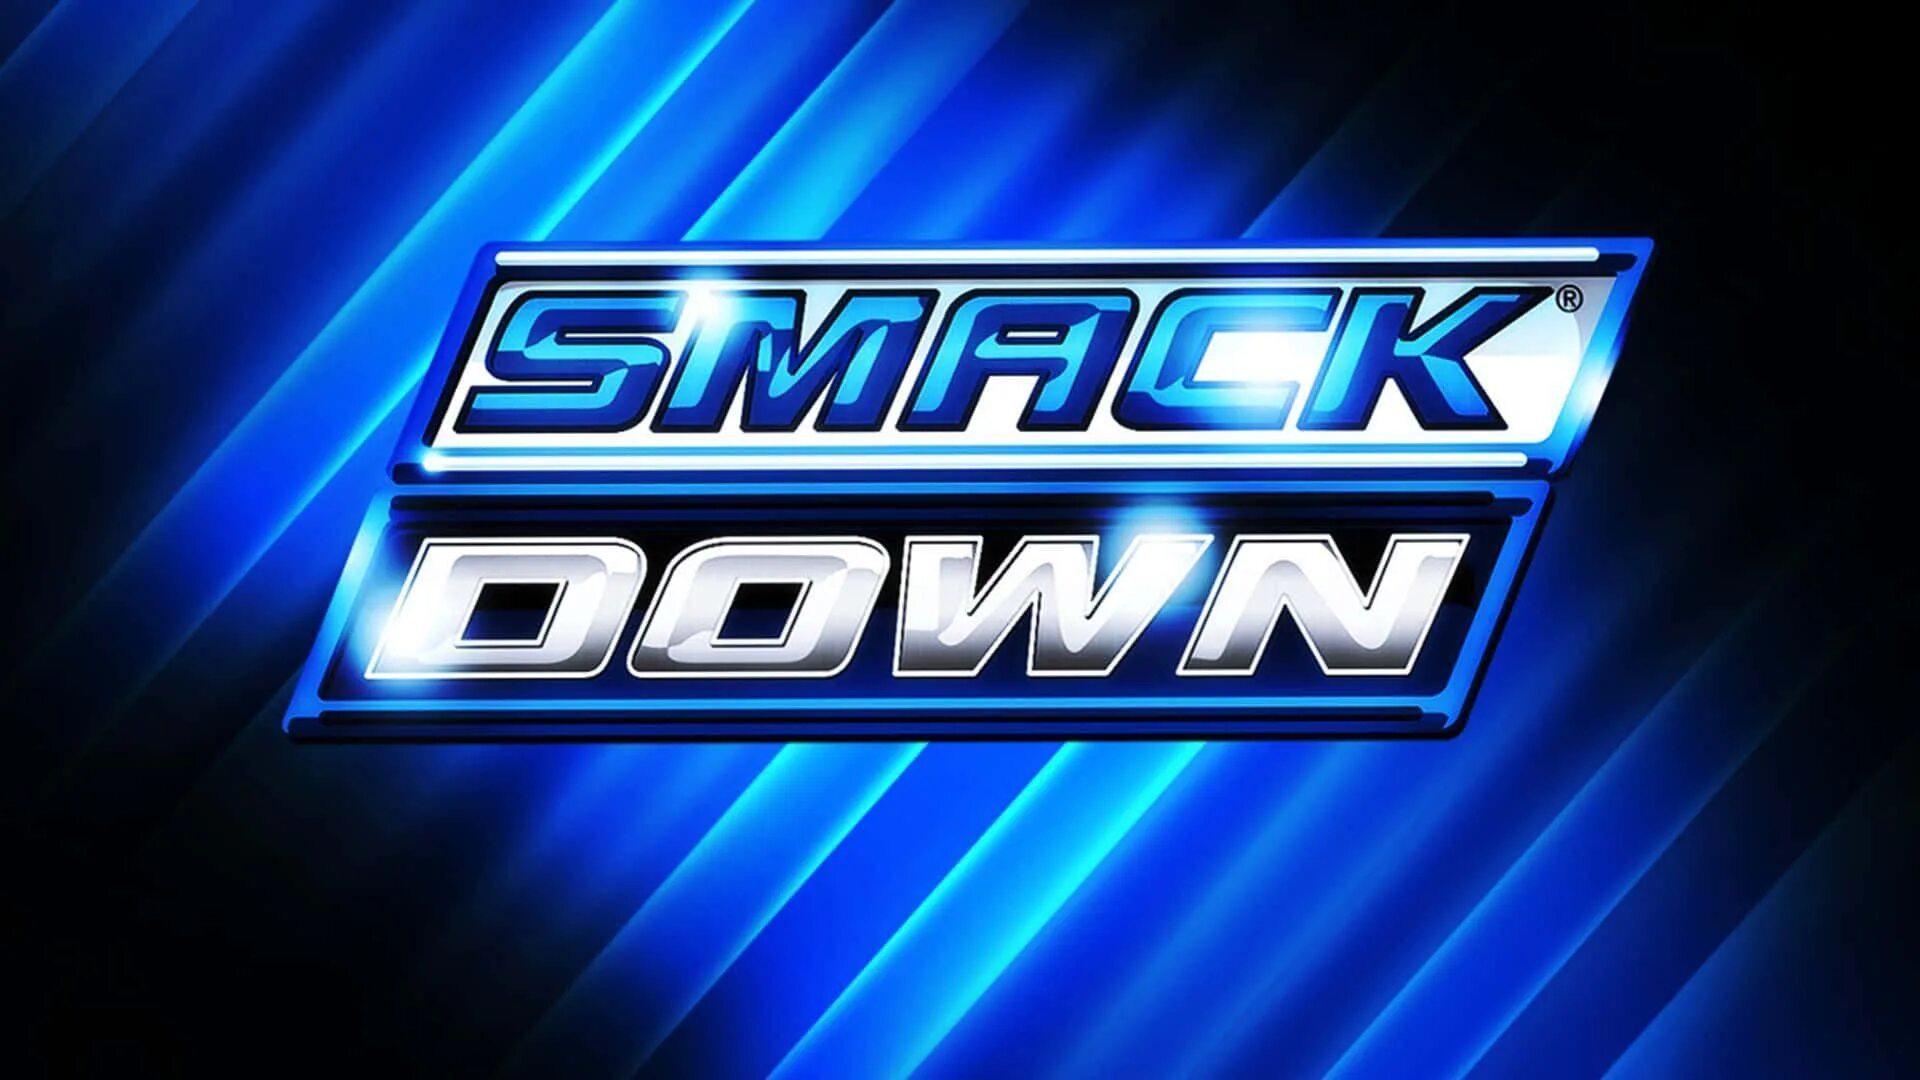 Wwe smackdown на русском. Реслинг WWE SMACKDOWN. Рестлер WWE SMACKDOWN. WWE SMACKDOWN logo. WWE SMACKDOWN Live.